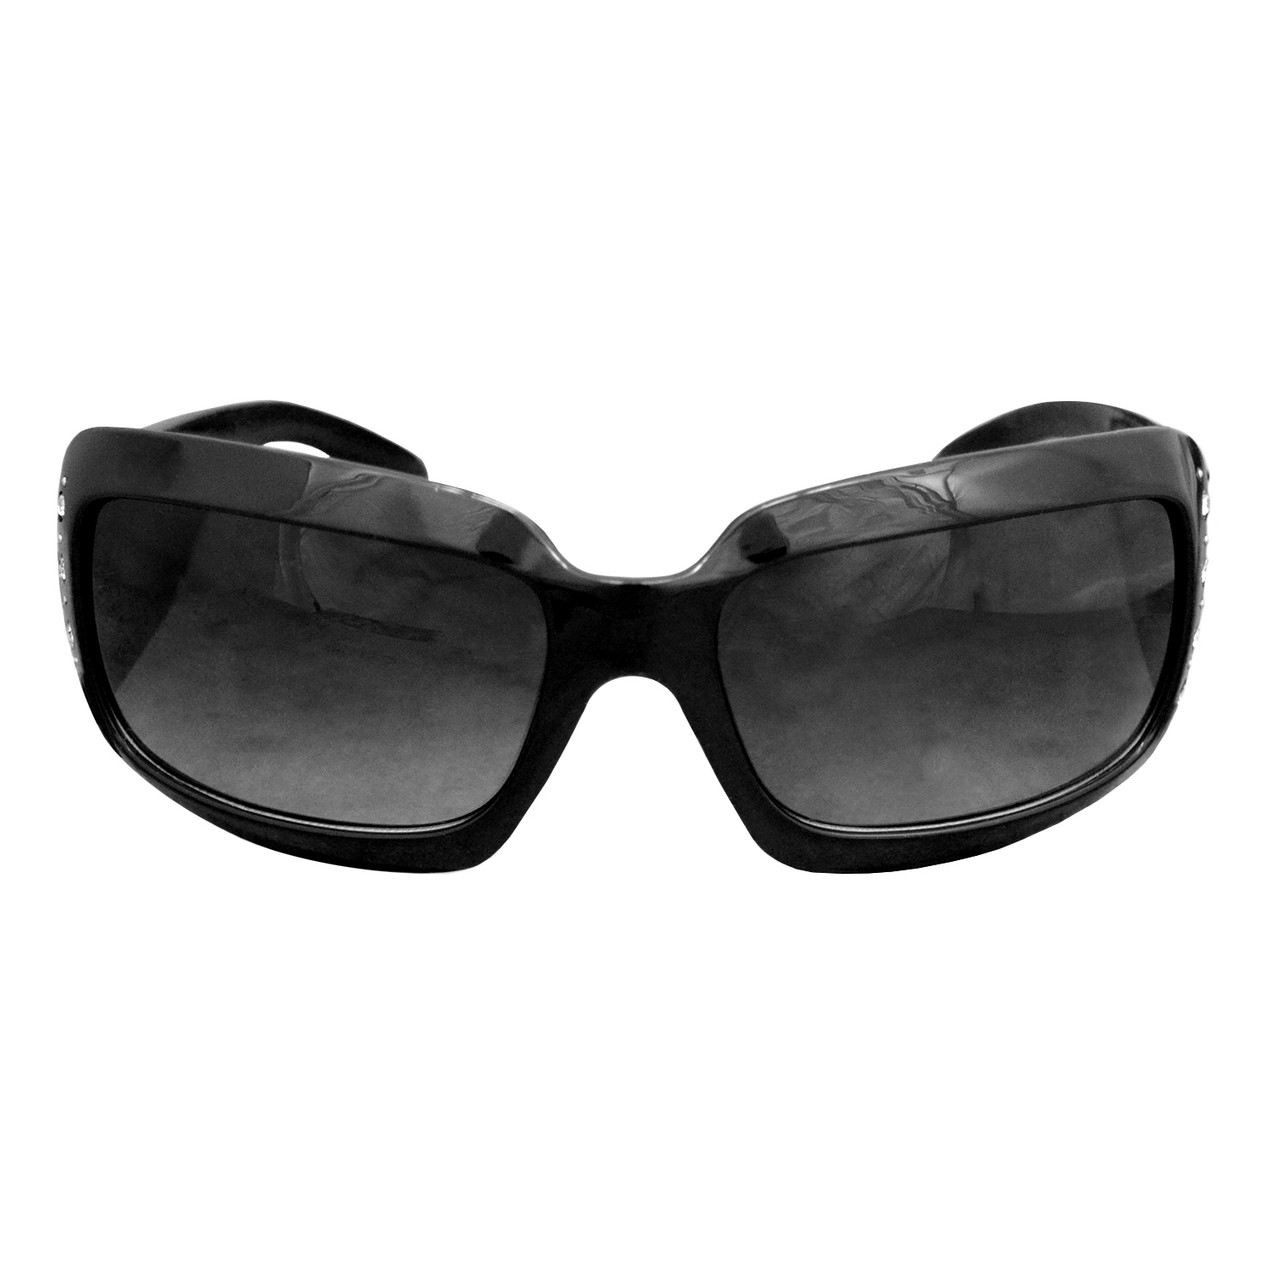 Charleston Cougars It Girl Fashion College Sunglasses (Black)